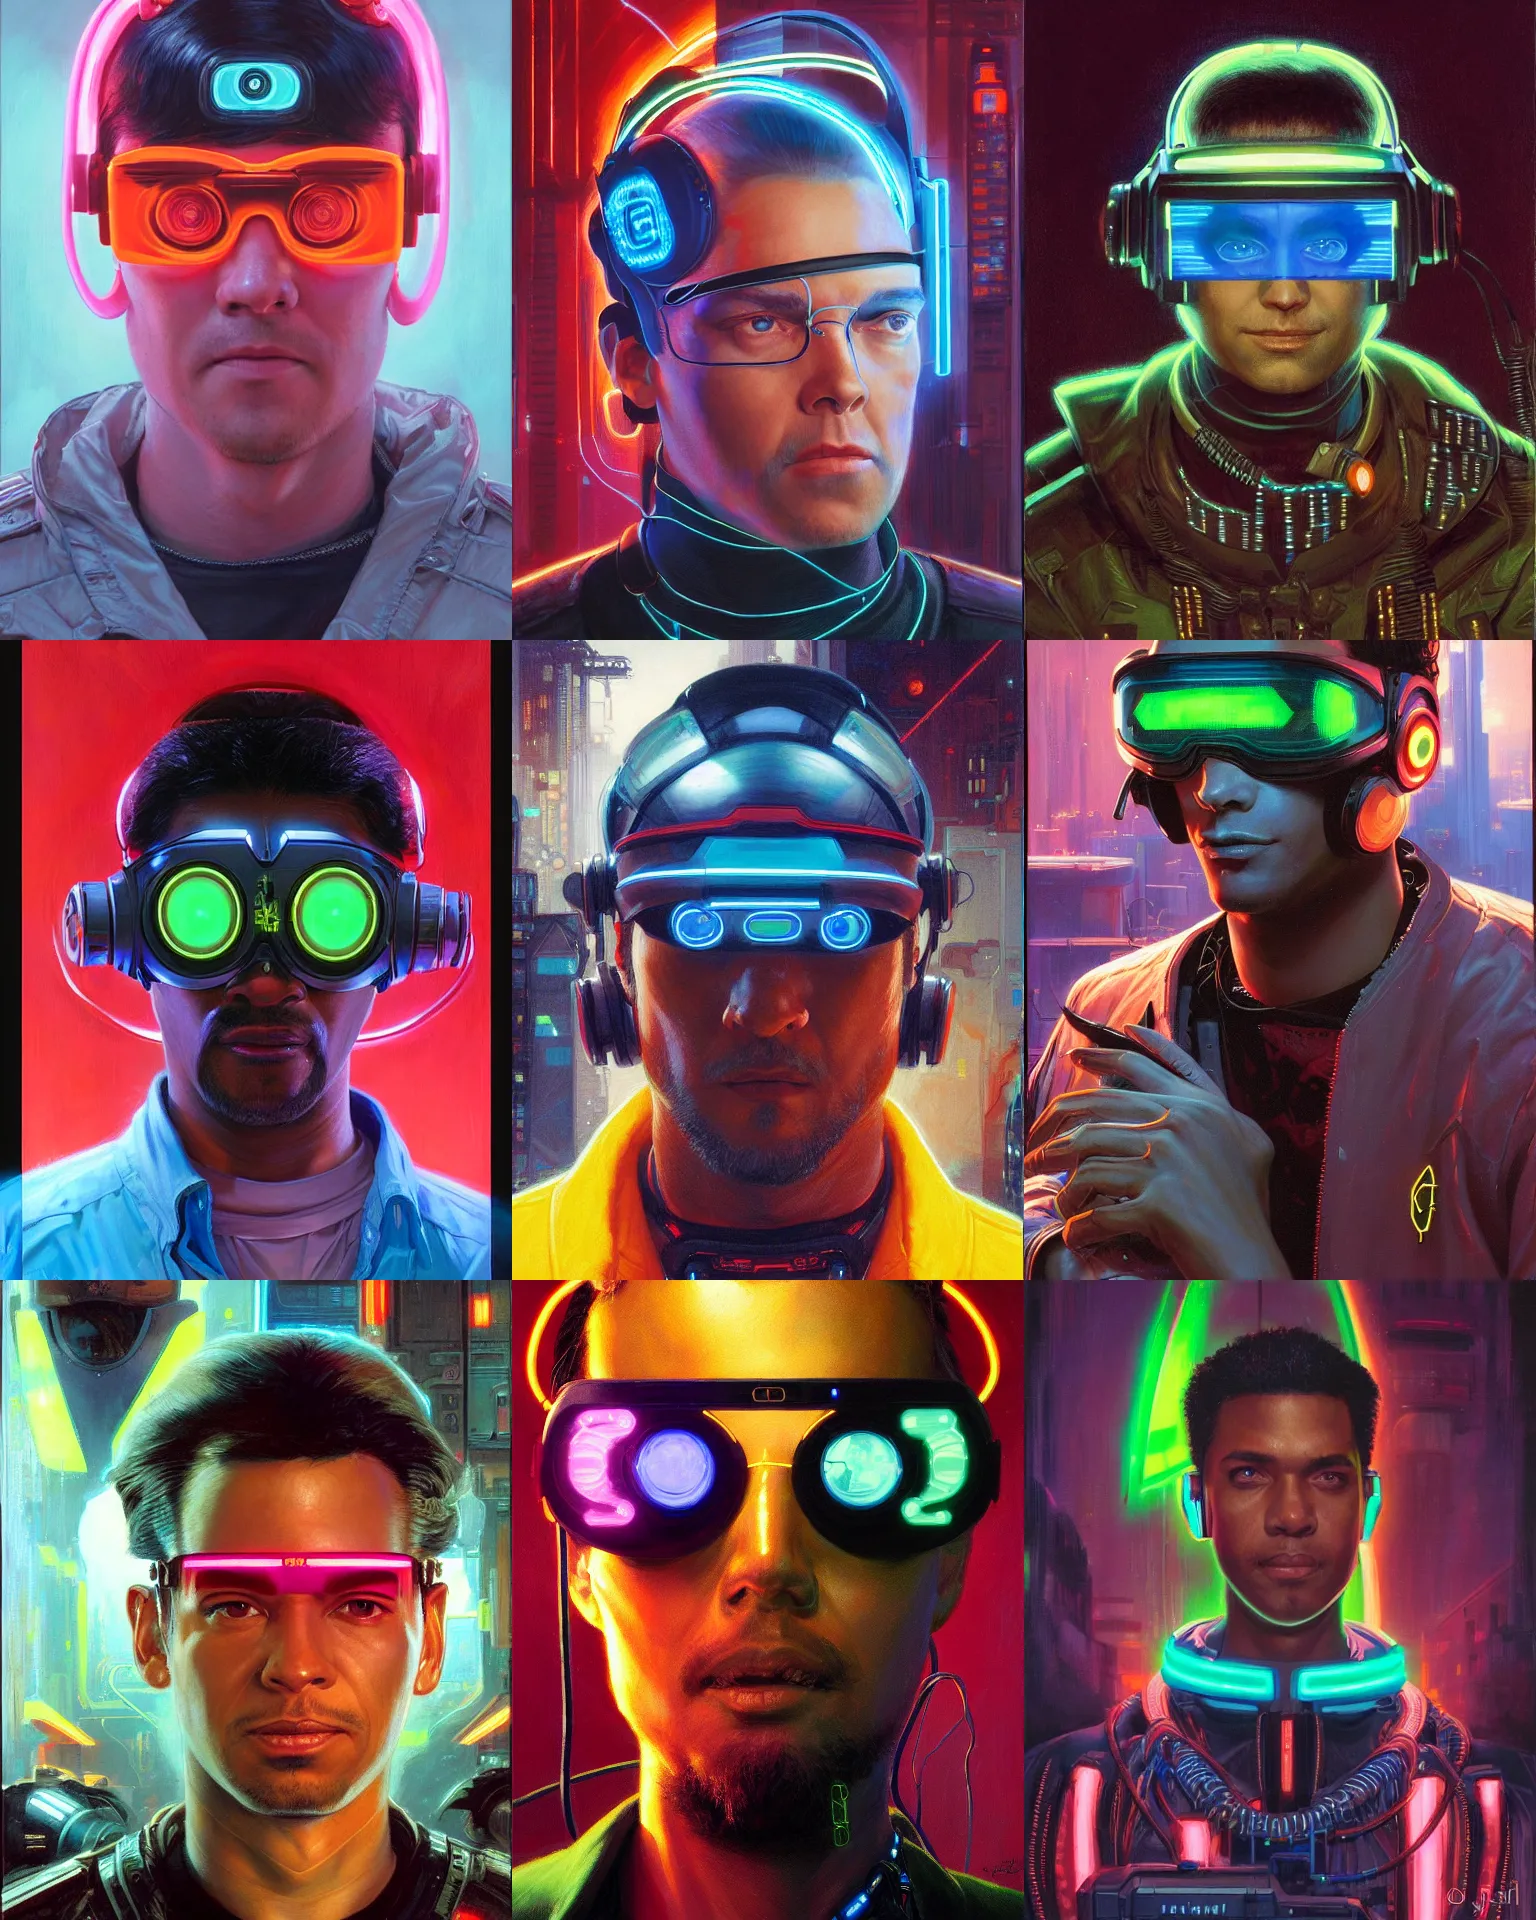 Prompt: neon cyberpunk coder with geordi eye visor and headset headshot portrait painting by donato giancola, kilian eng, john berkley, hayao miyazaki, j. c. leyendecker, mead schaeffer